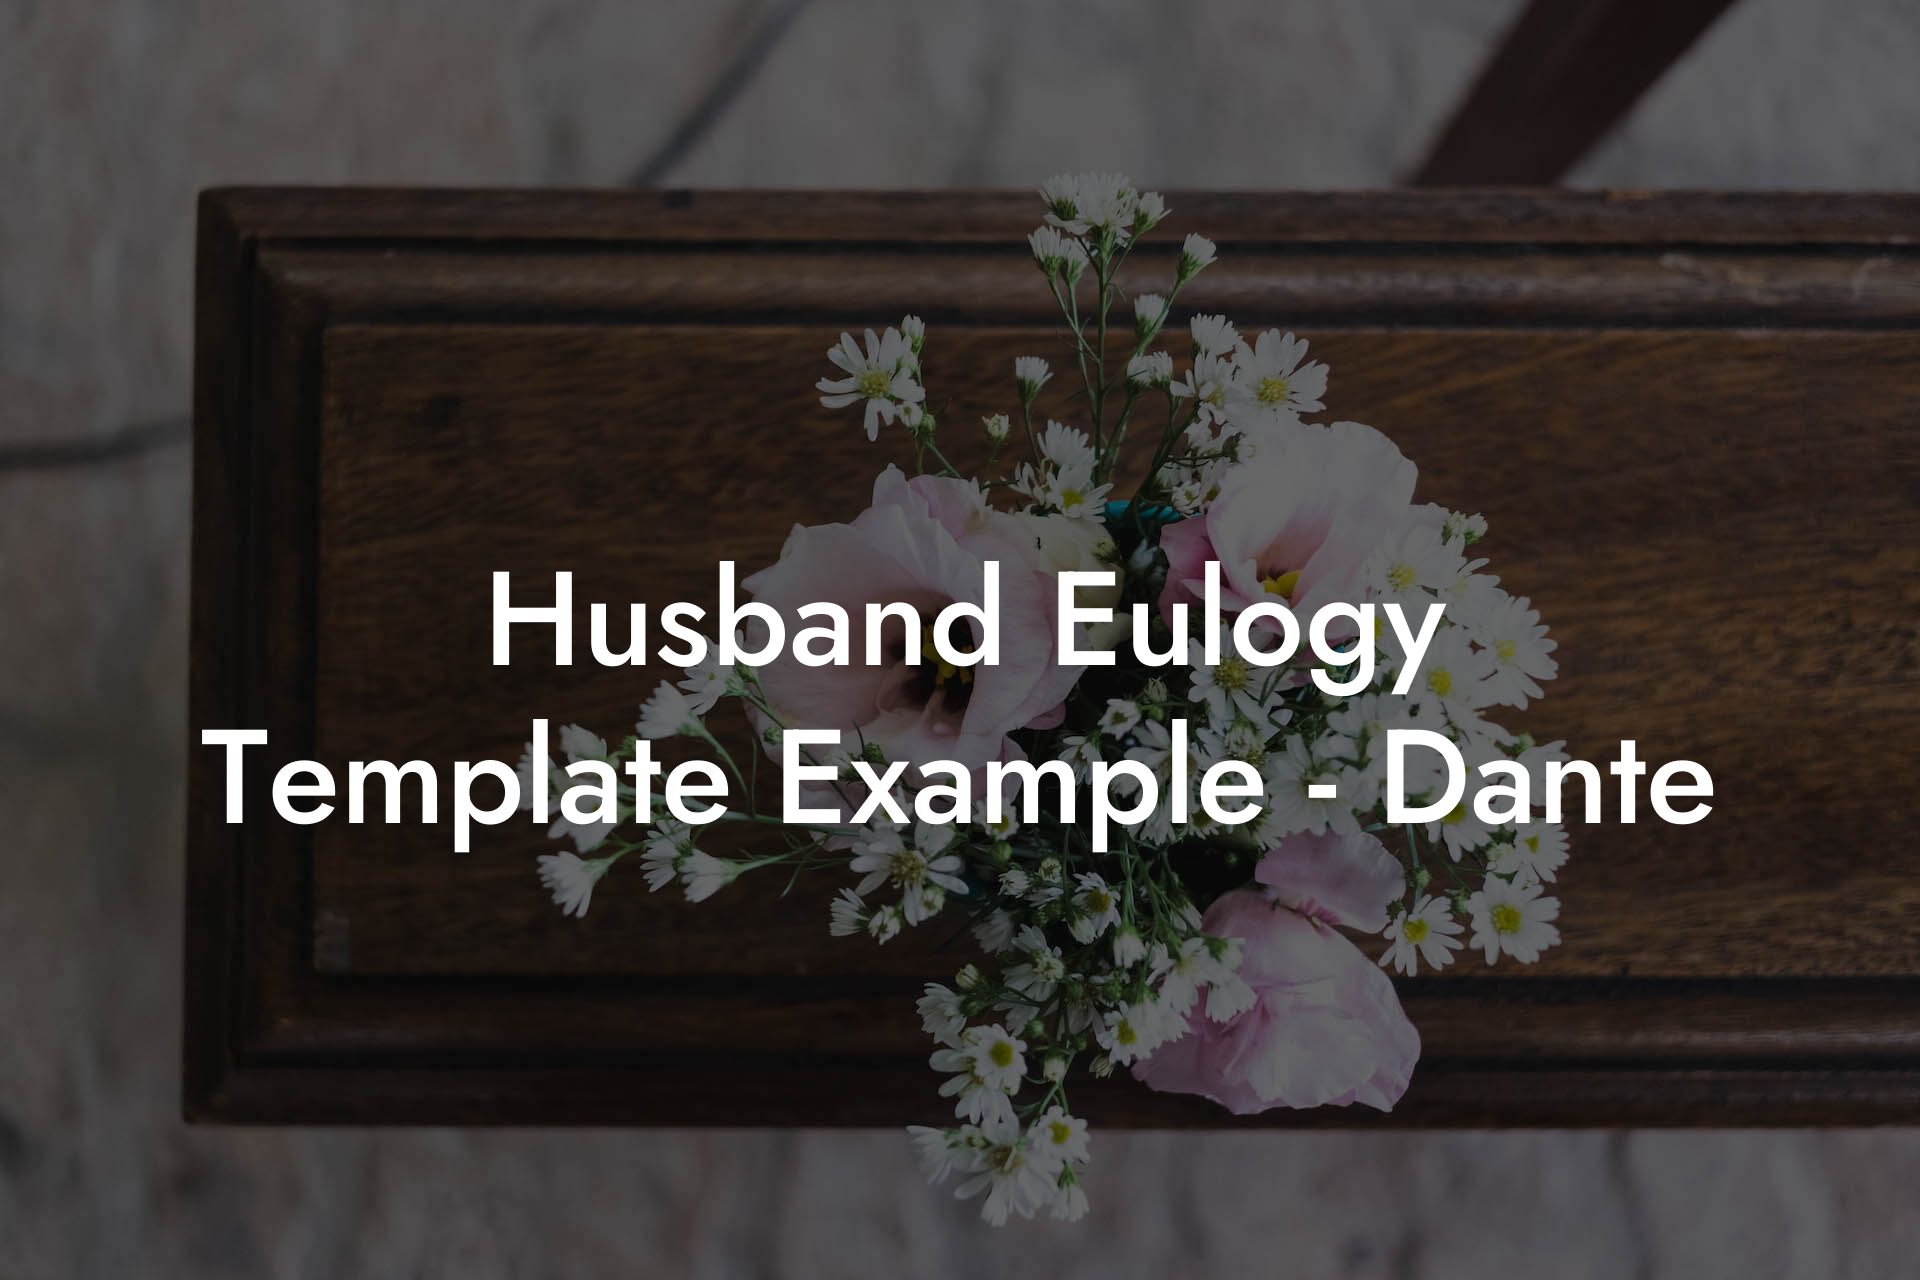 Husband Eulogy Template Example - Dante